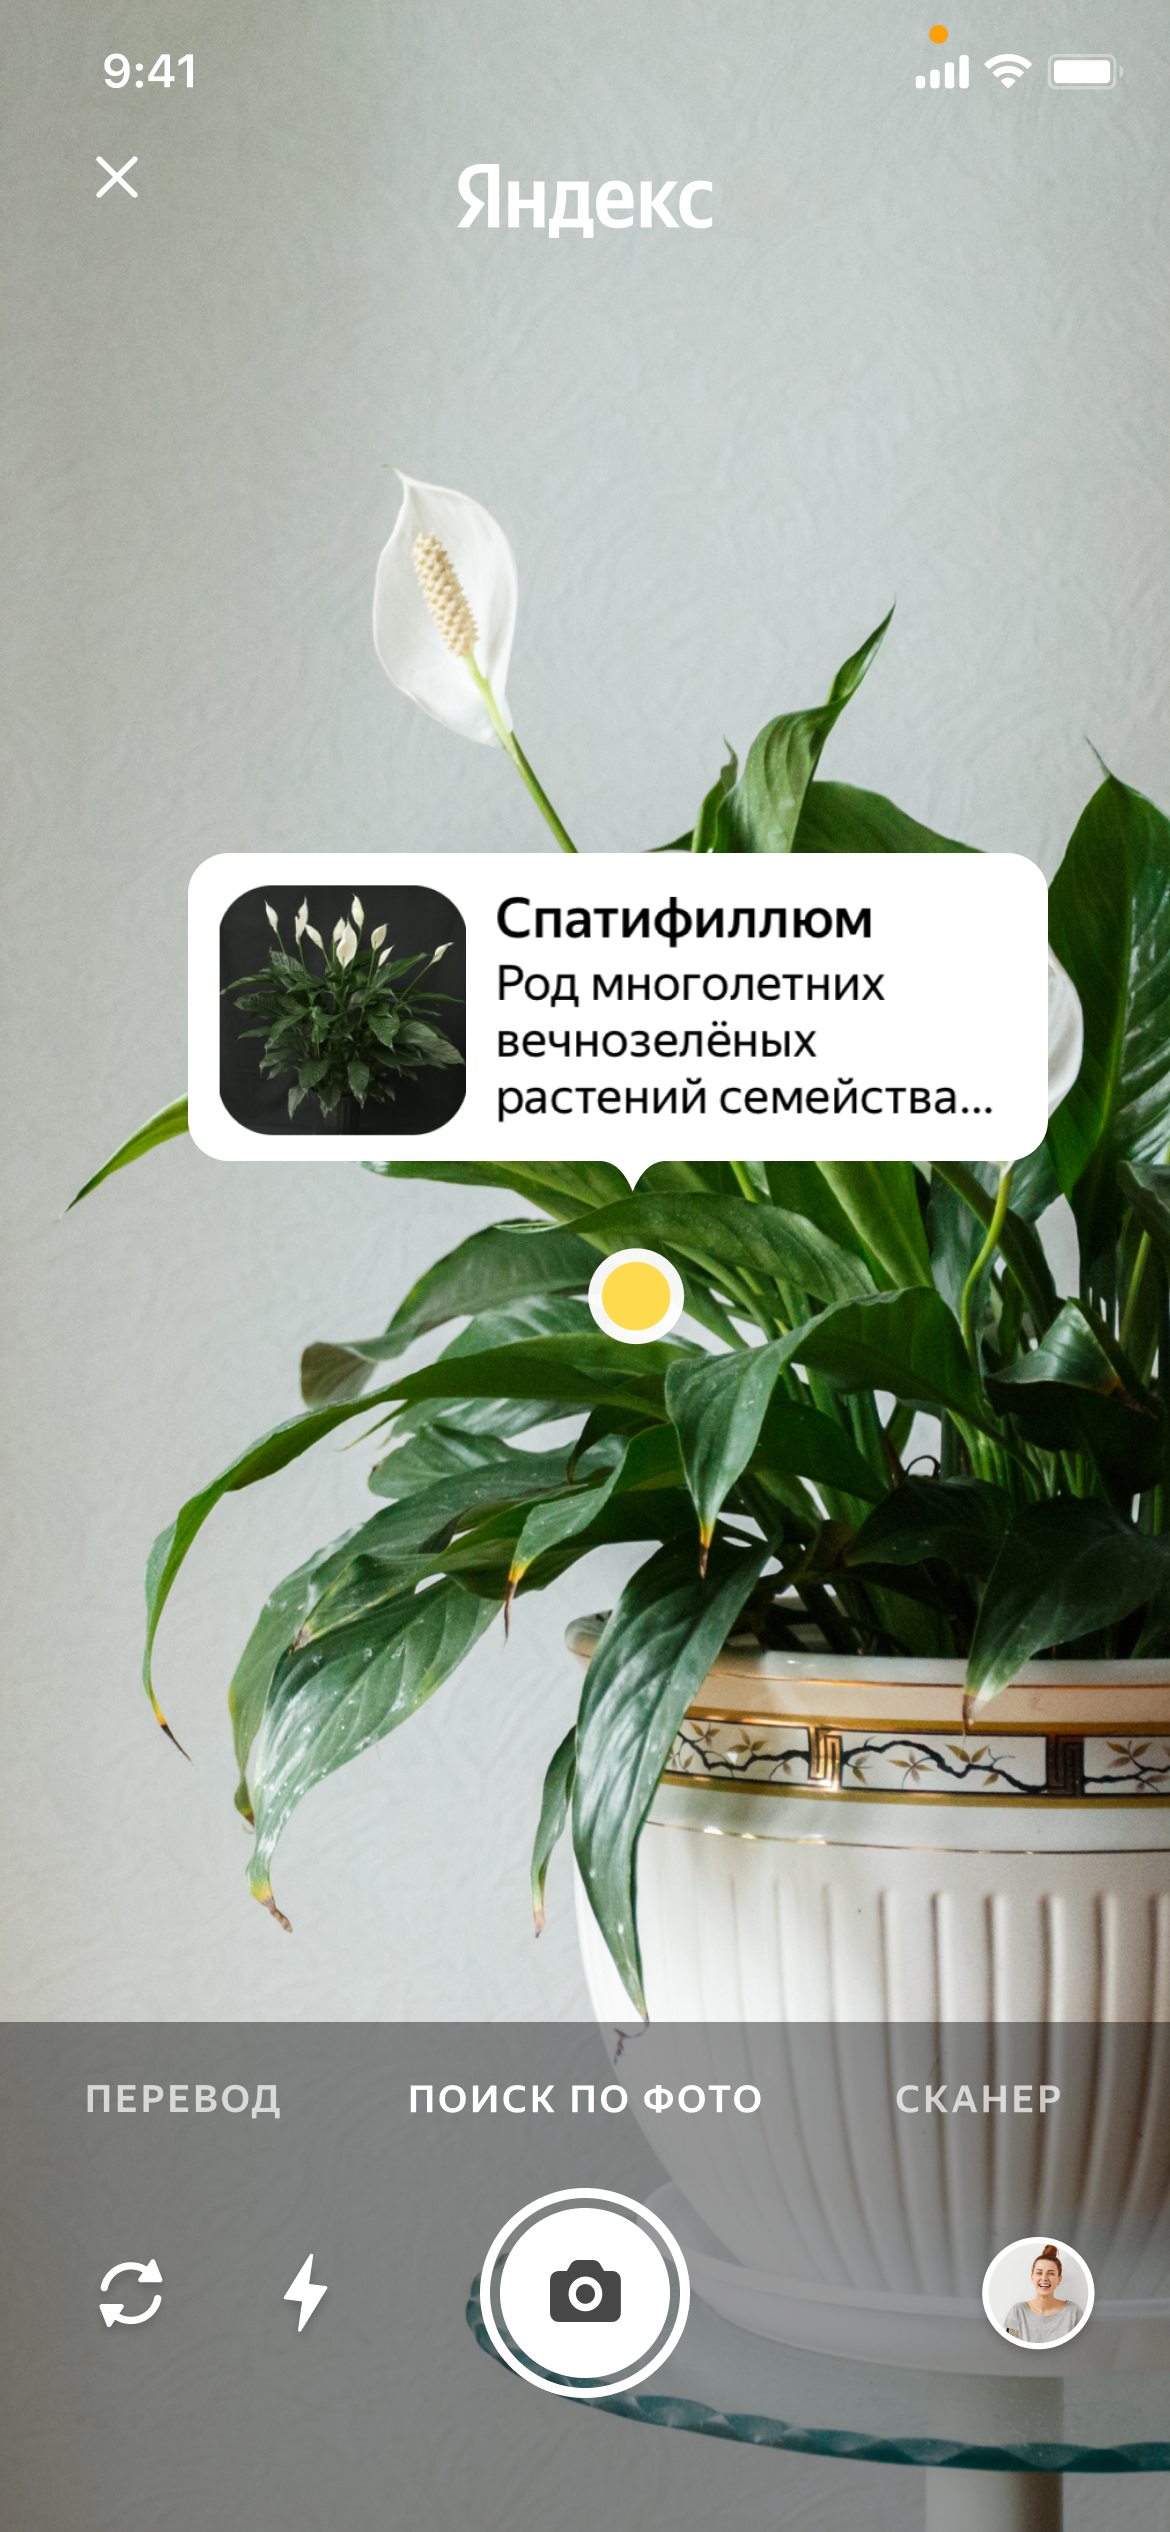 Определить По Фото Растение В Яндексе